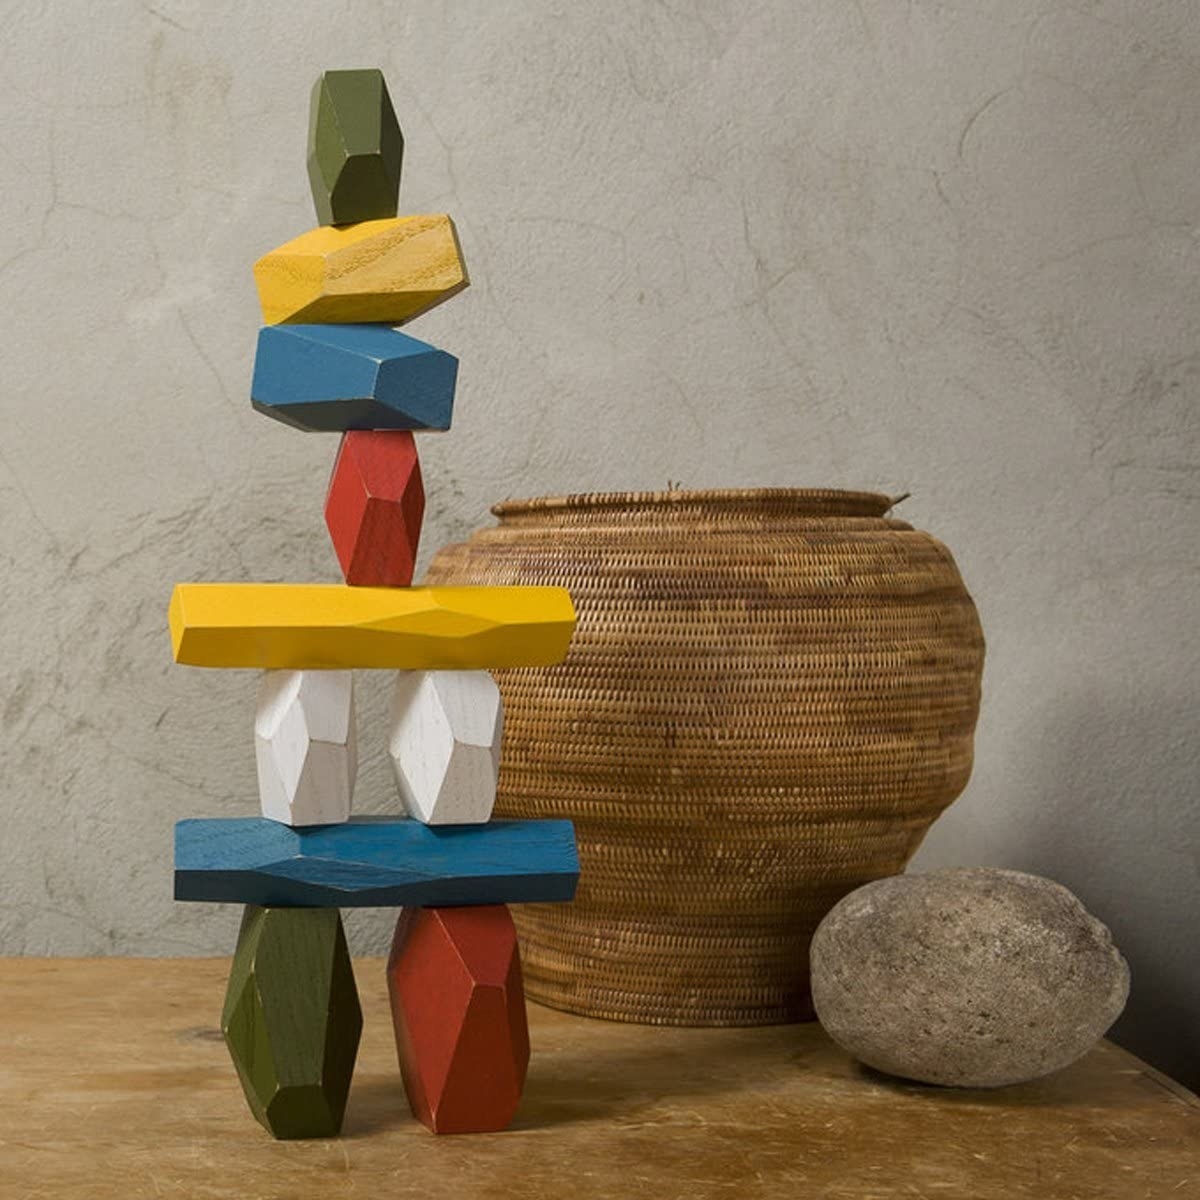 Multi-colored balancing blocks